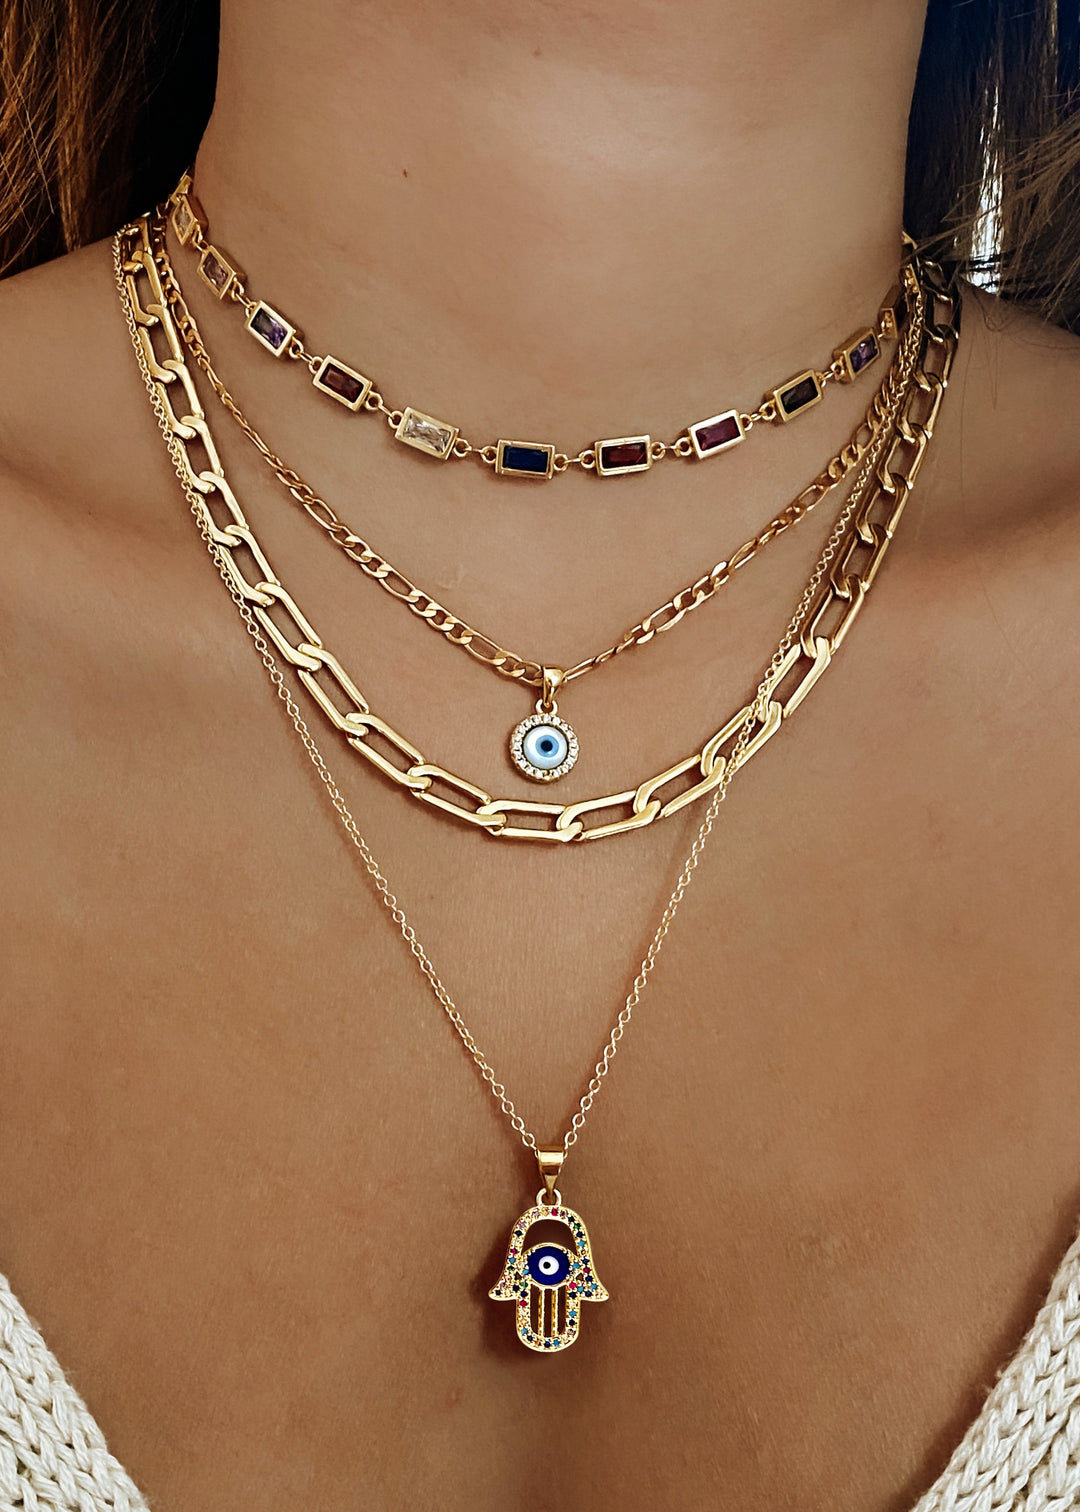 Hamsa Blessing Necklace - Gold Filled